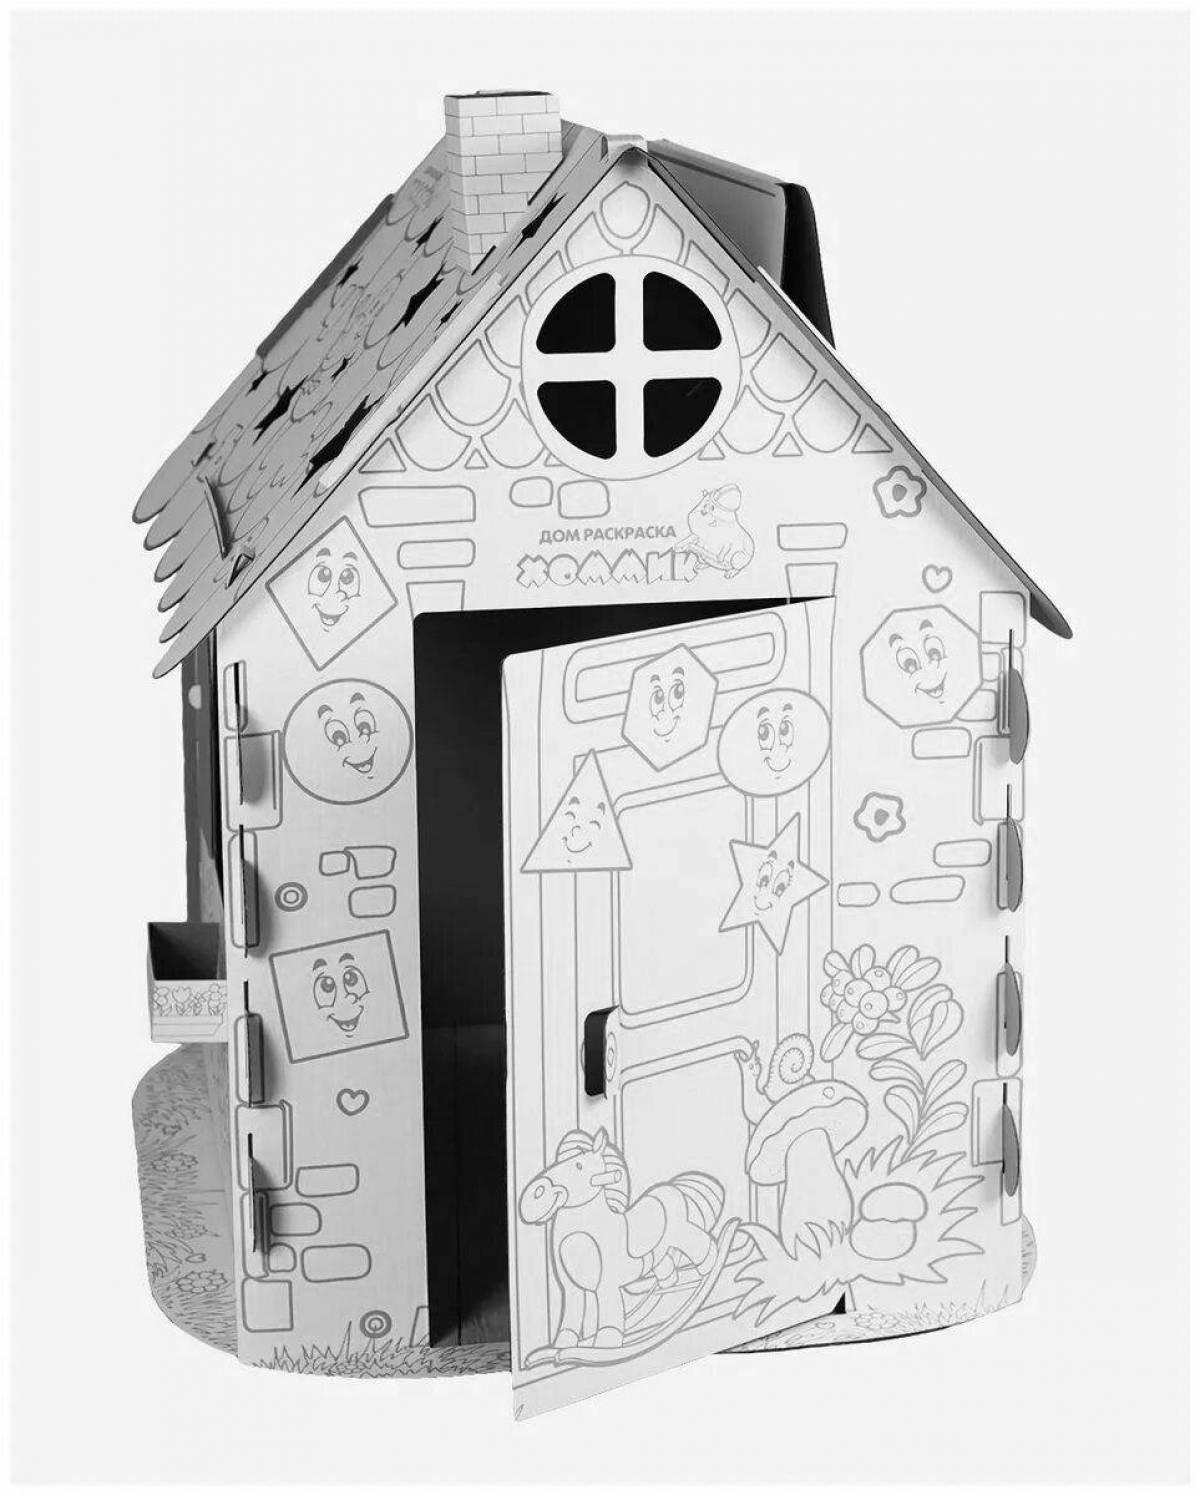 Cardboard playhouse #2